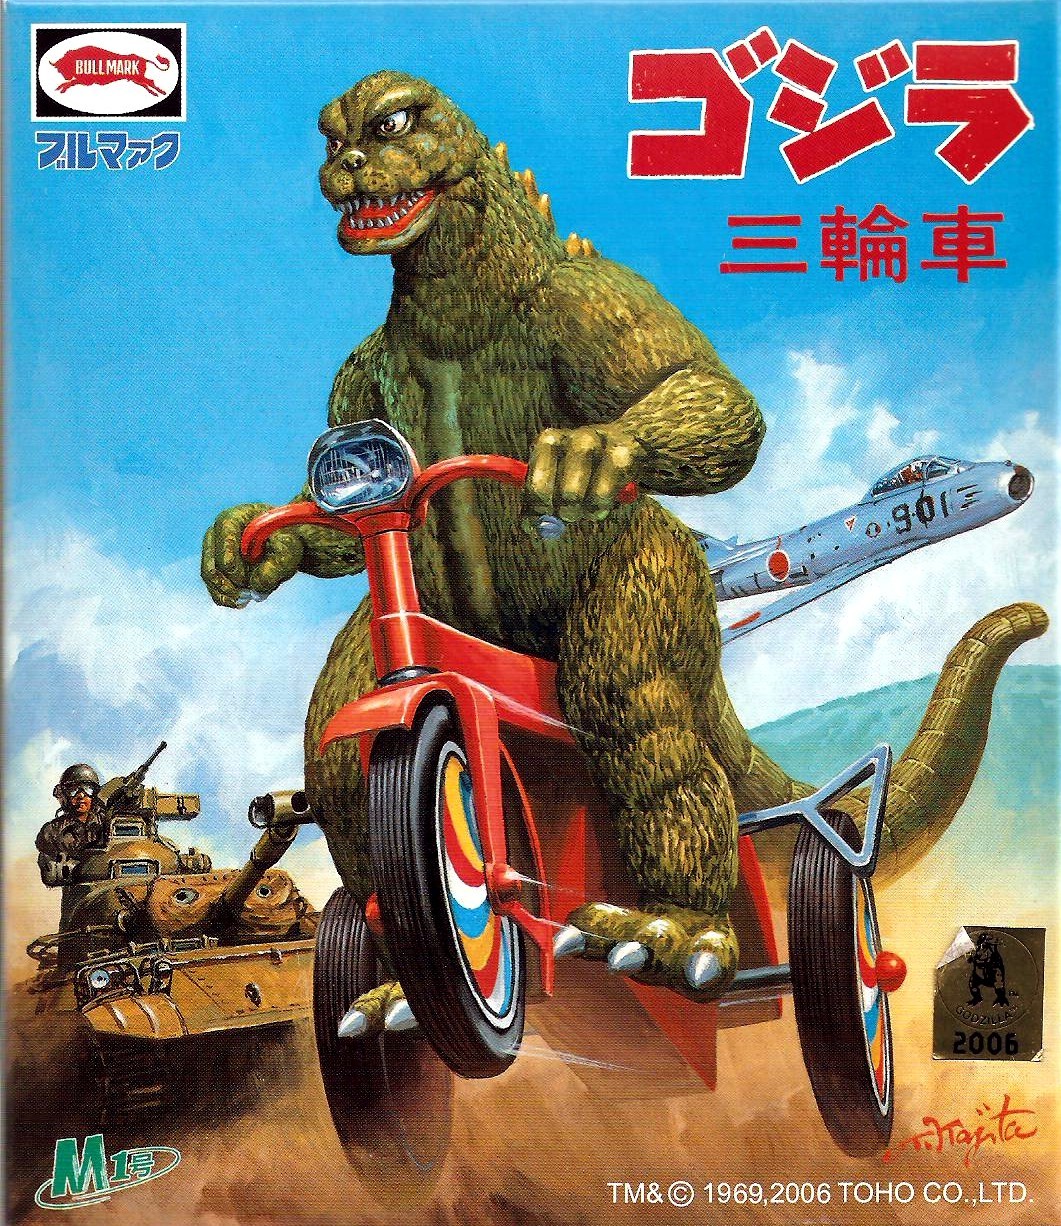 yukko:
“ theemitter:
“ petapeta:
“ jinon:
“ locusta:
“ Godzilla Tricycle Art
” ”